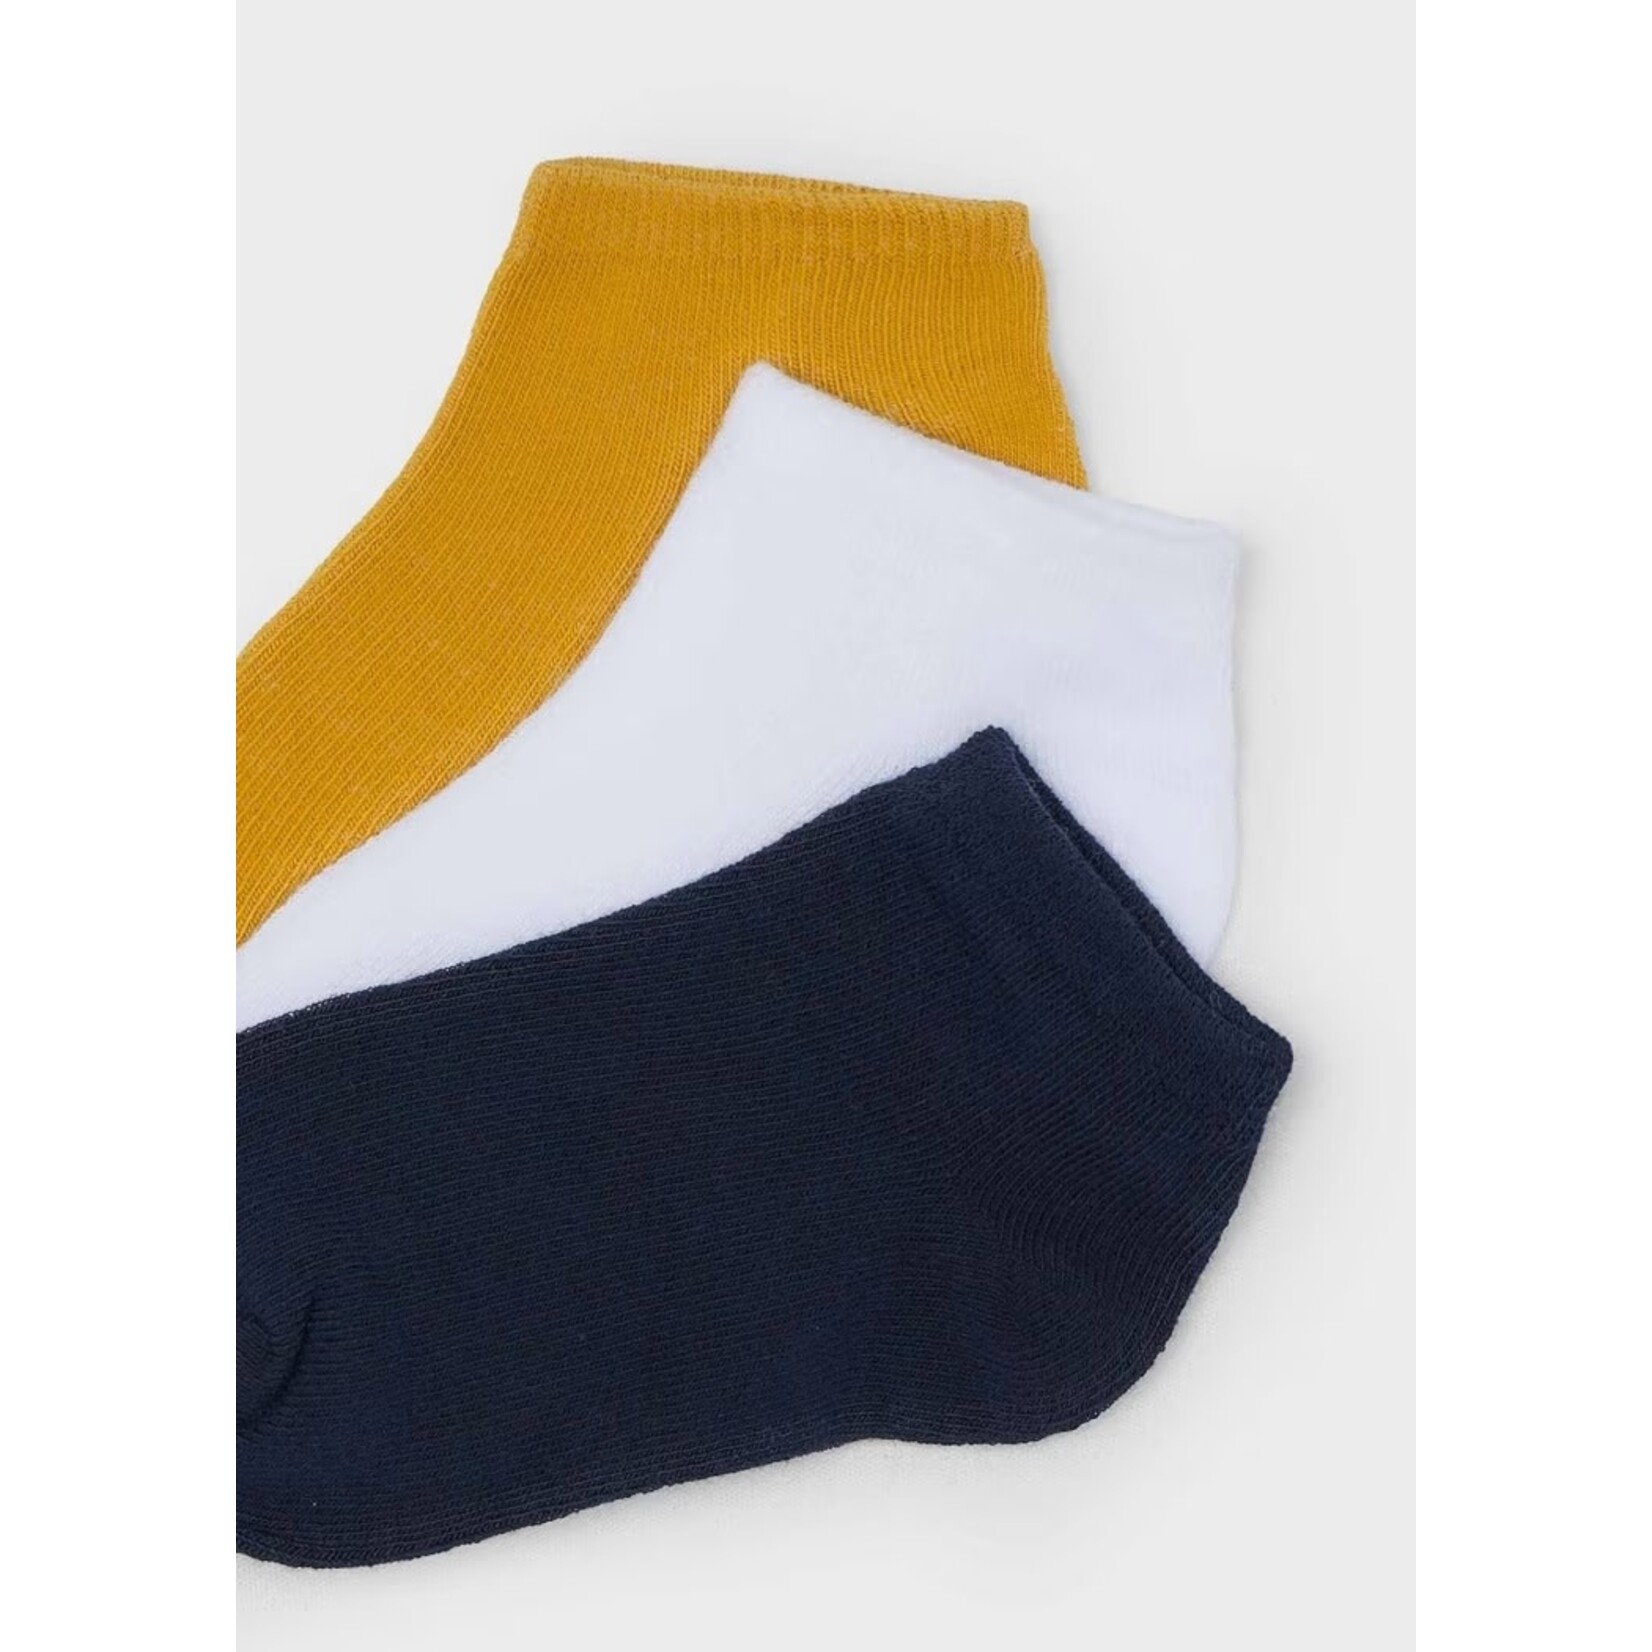 Mayoral MAYORAL - set of 3 pairs of short socks 'Navy, white, mustard yellow'